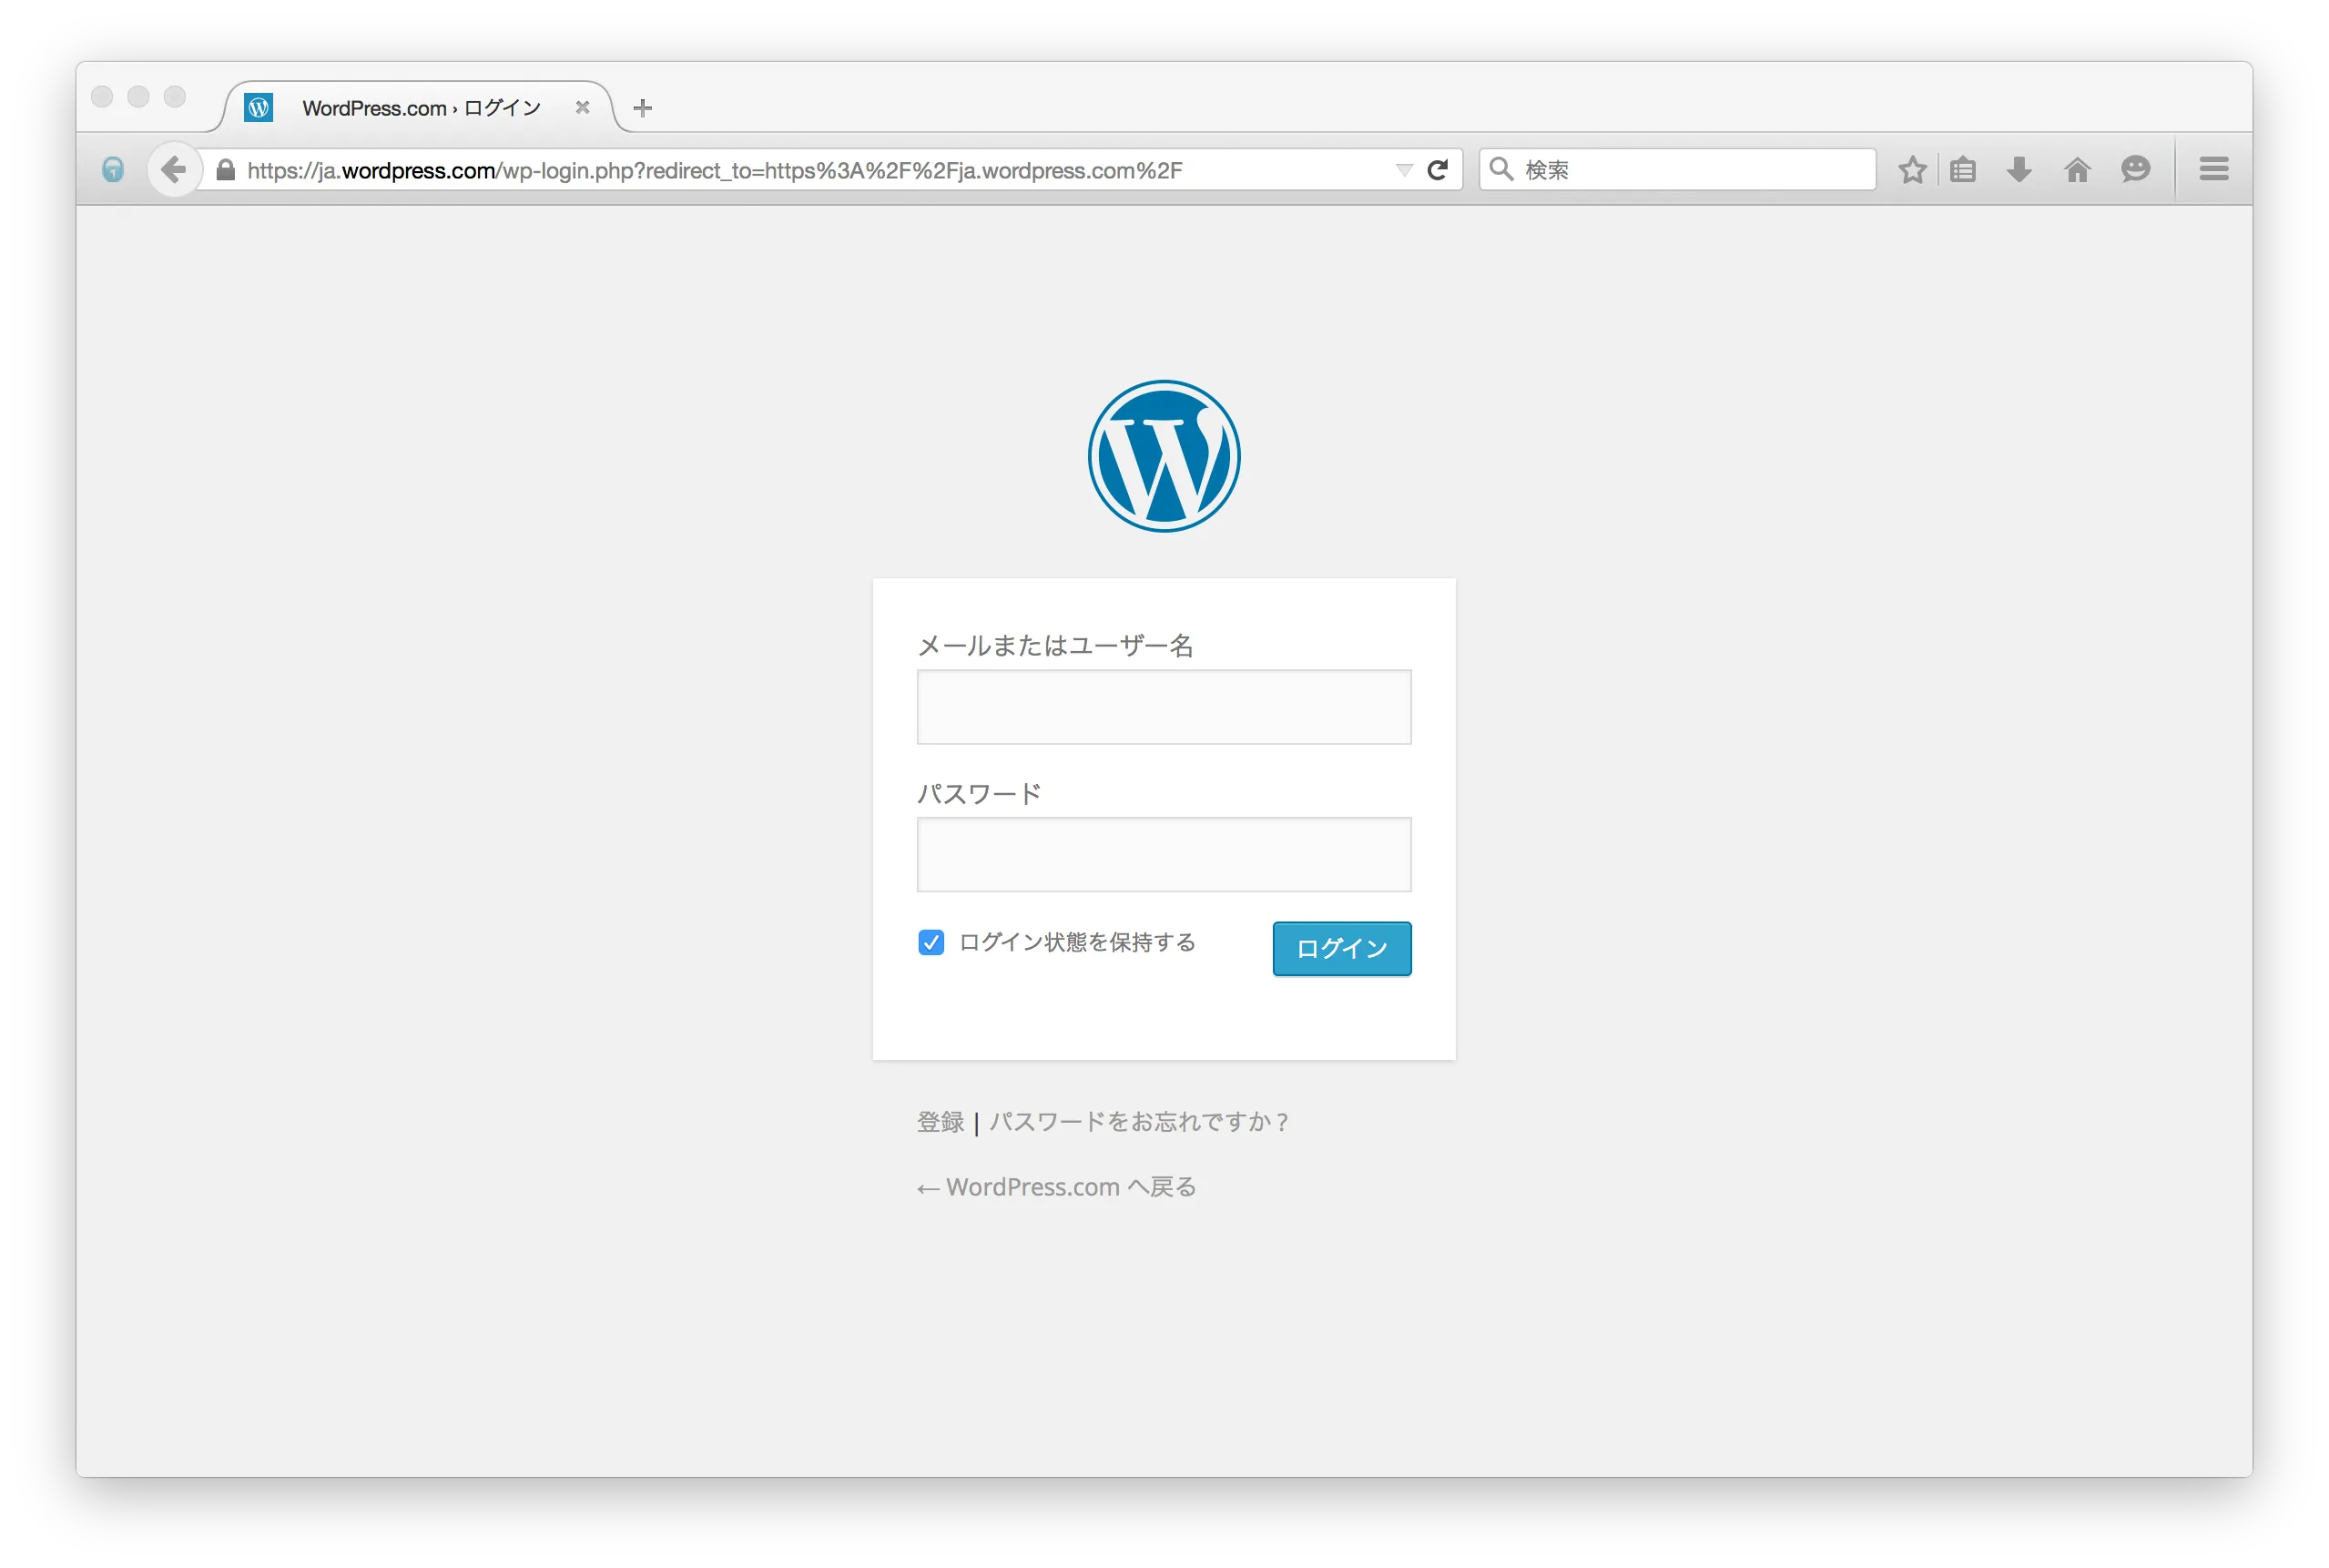 WordPressとOneLoginをSAML連携することで御社のWebサイトを安全に運用することが可能になります。